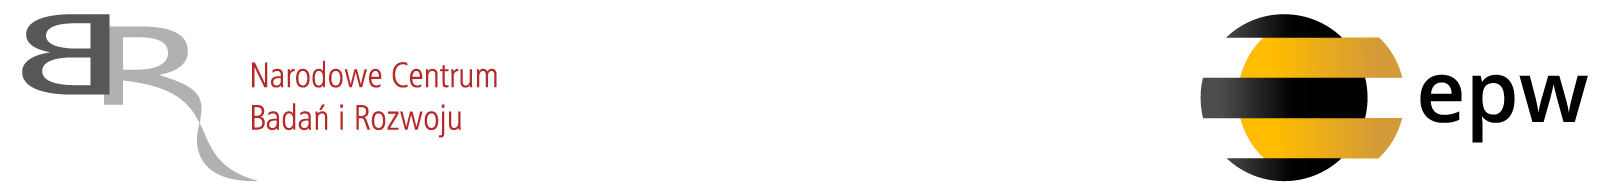 Logo NCBiR i logo projektu EPW